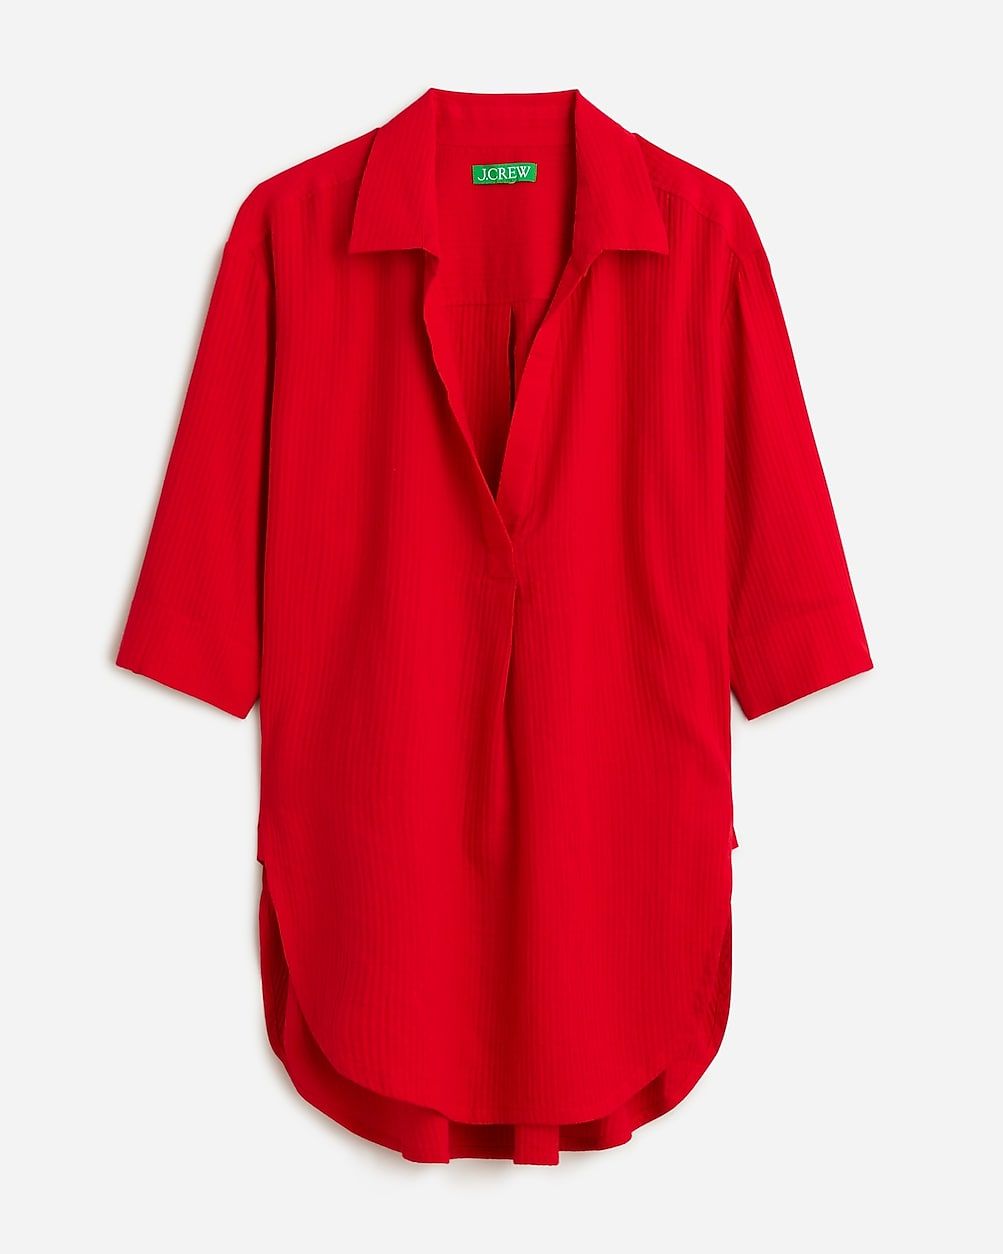 best seller4.5(63 REVIEWS)Popover shirt in airy gauze$79.50-$89.50Select Colors$39.50-$54.50Venet... | J.Crew US